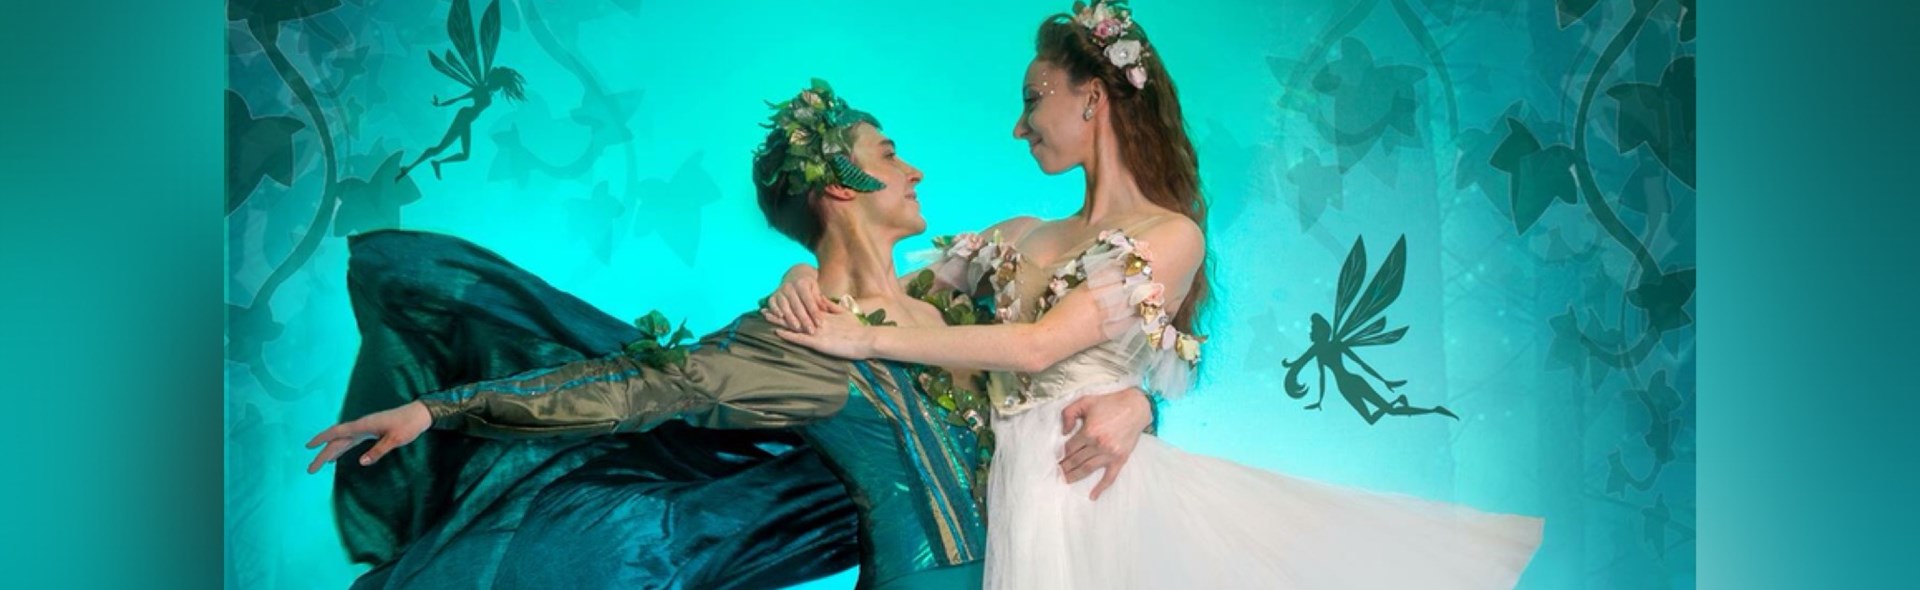 Ballet Theatre UK: A Midsummer Night's Dream